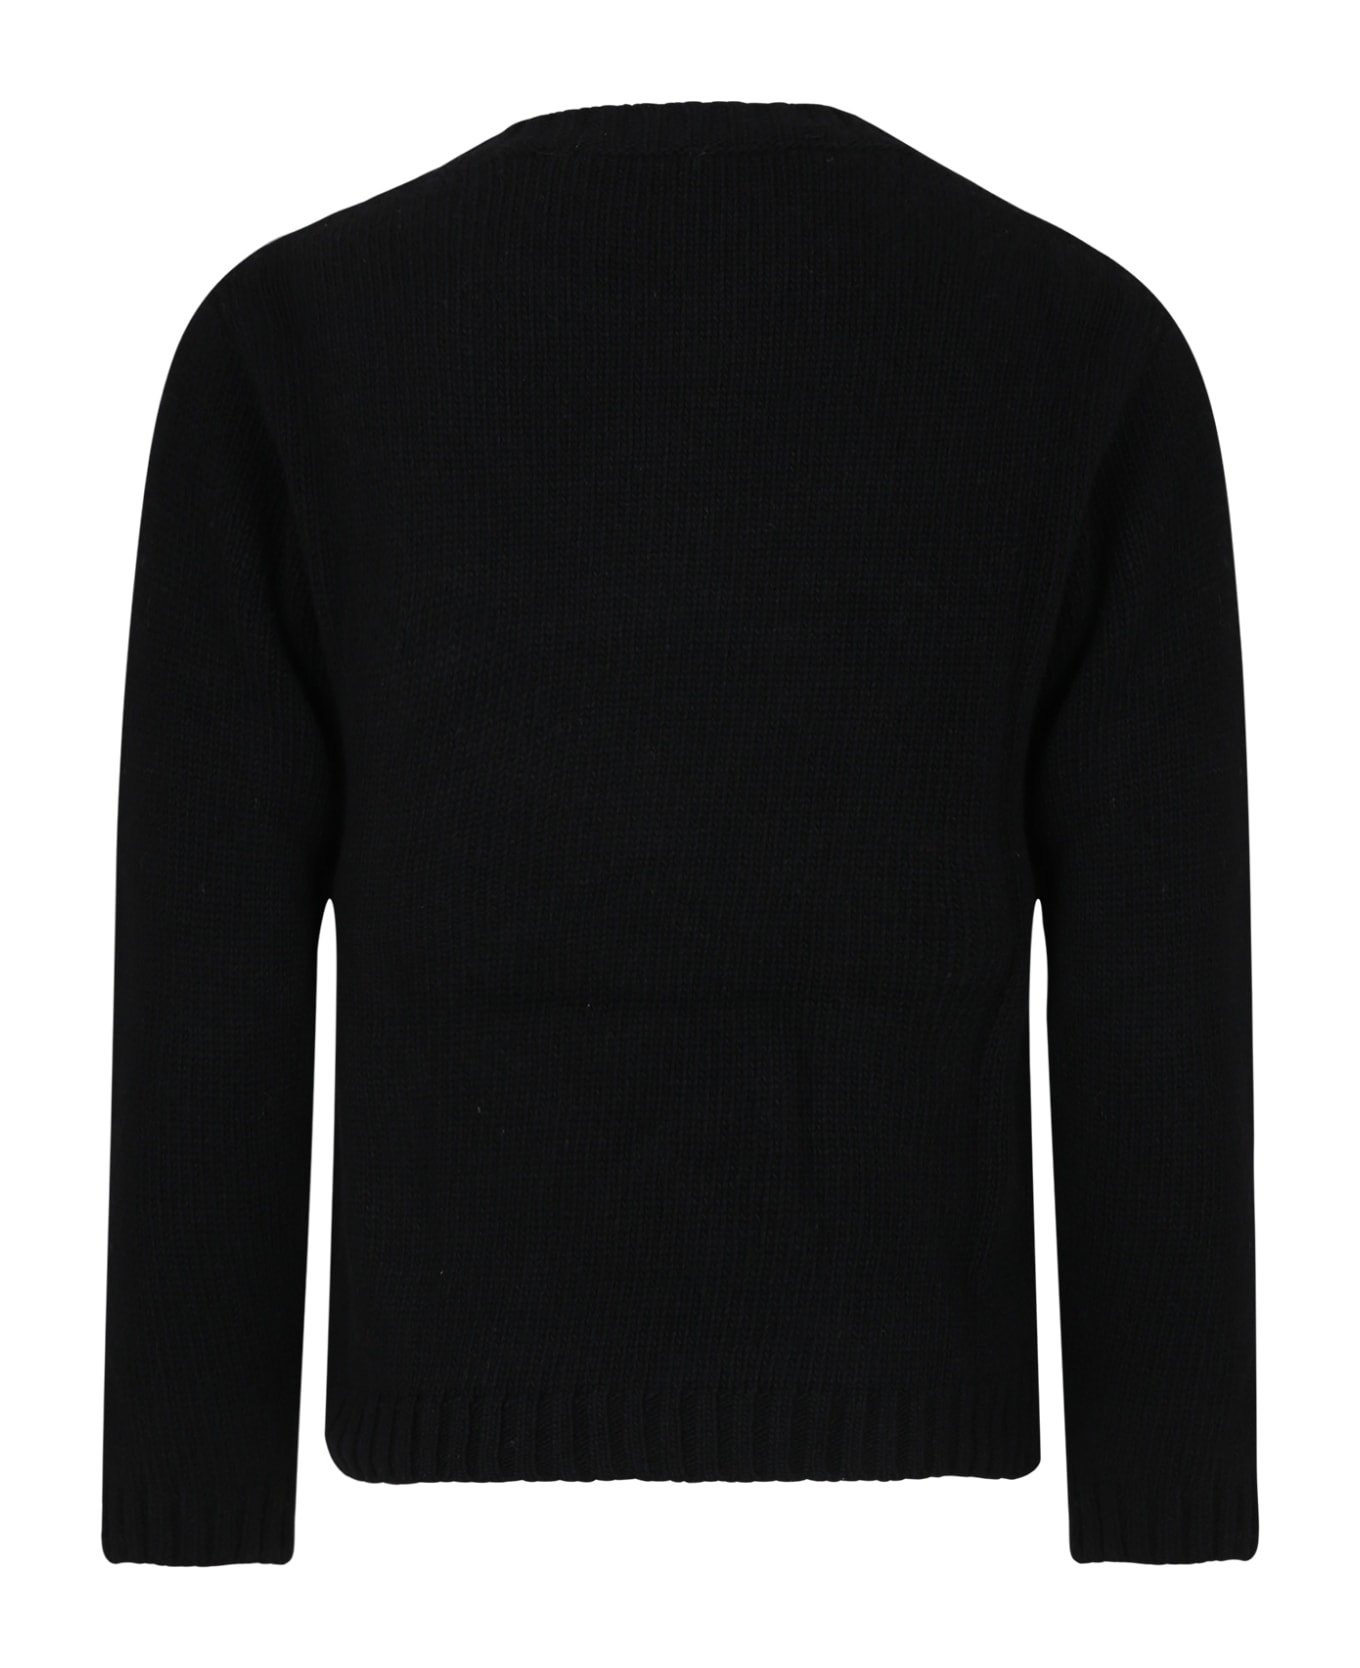 Philosophy di Lorenzo Serafini Kids Black Sweater For Girl With Logo - Nero